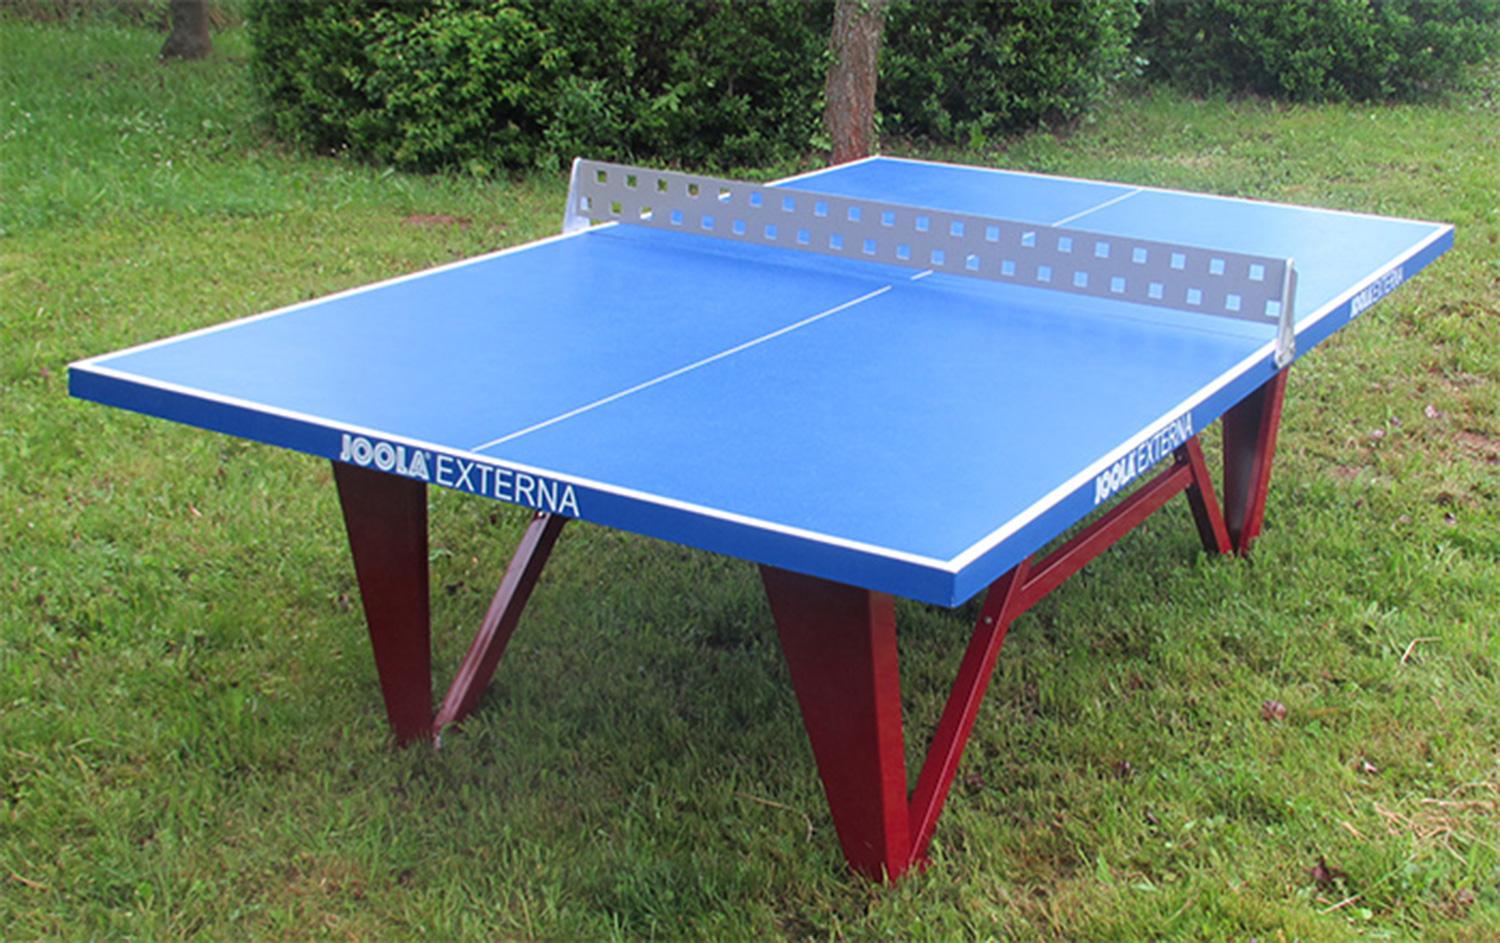 Joola Outdoor-Tischtennisplatte "Externa" wetterfest, blau Bild 1